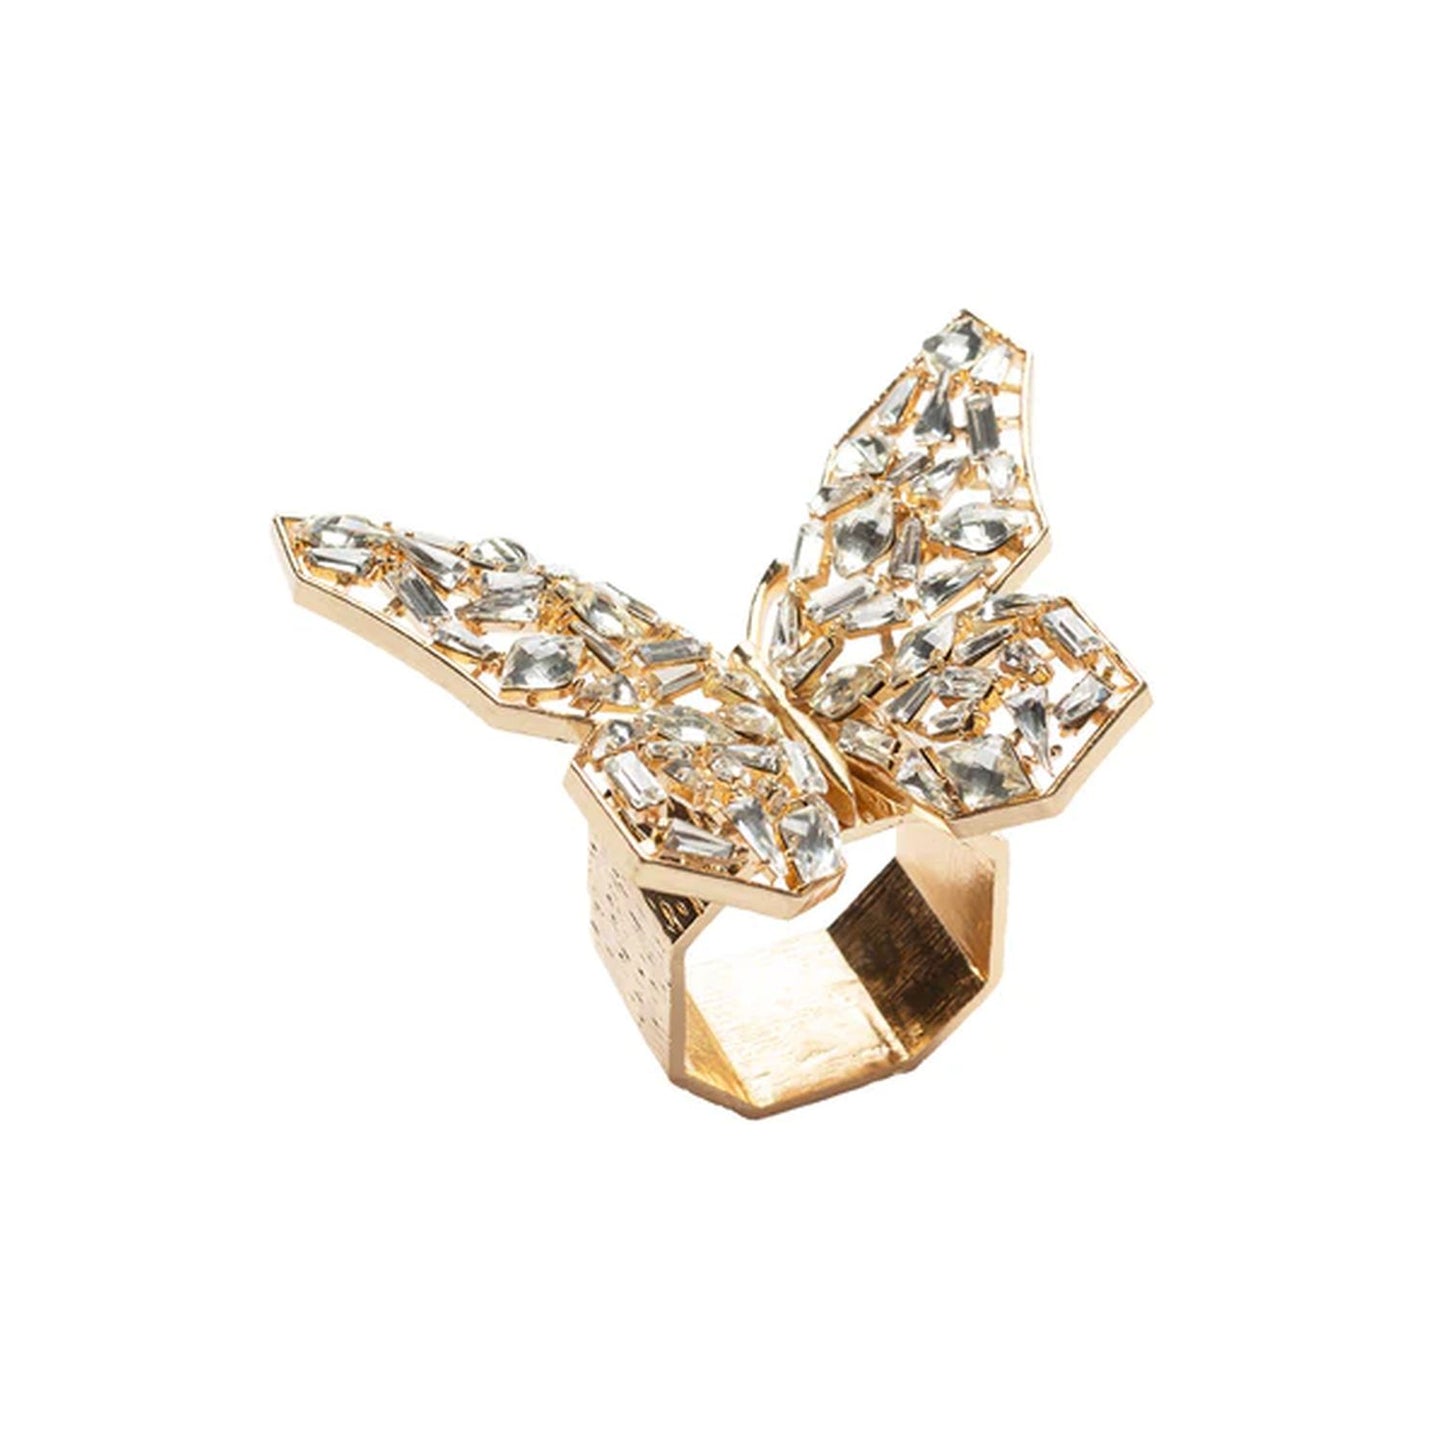 Kim Seybert Papillon Napkin Ring in Gold & Crystal, Set of 4 in a Gift Box